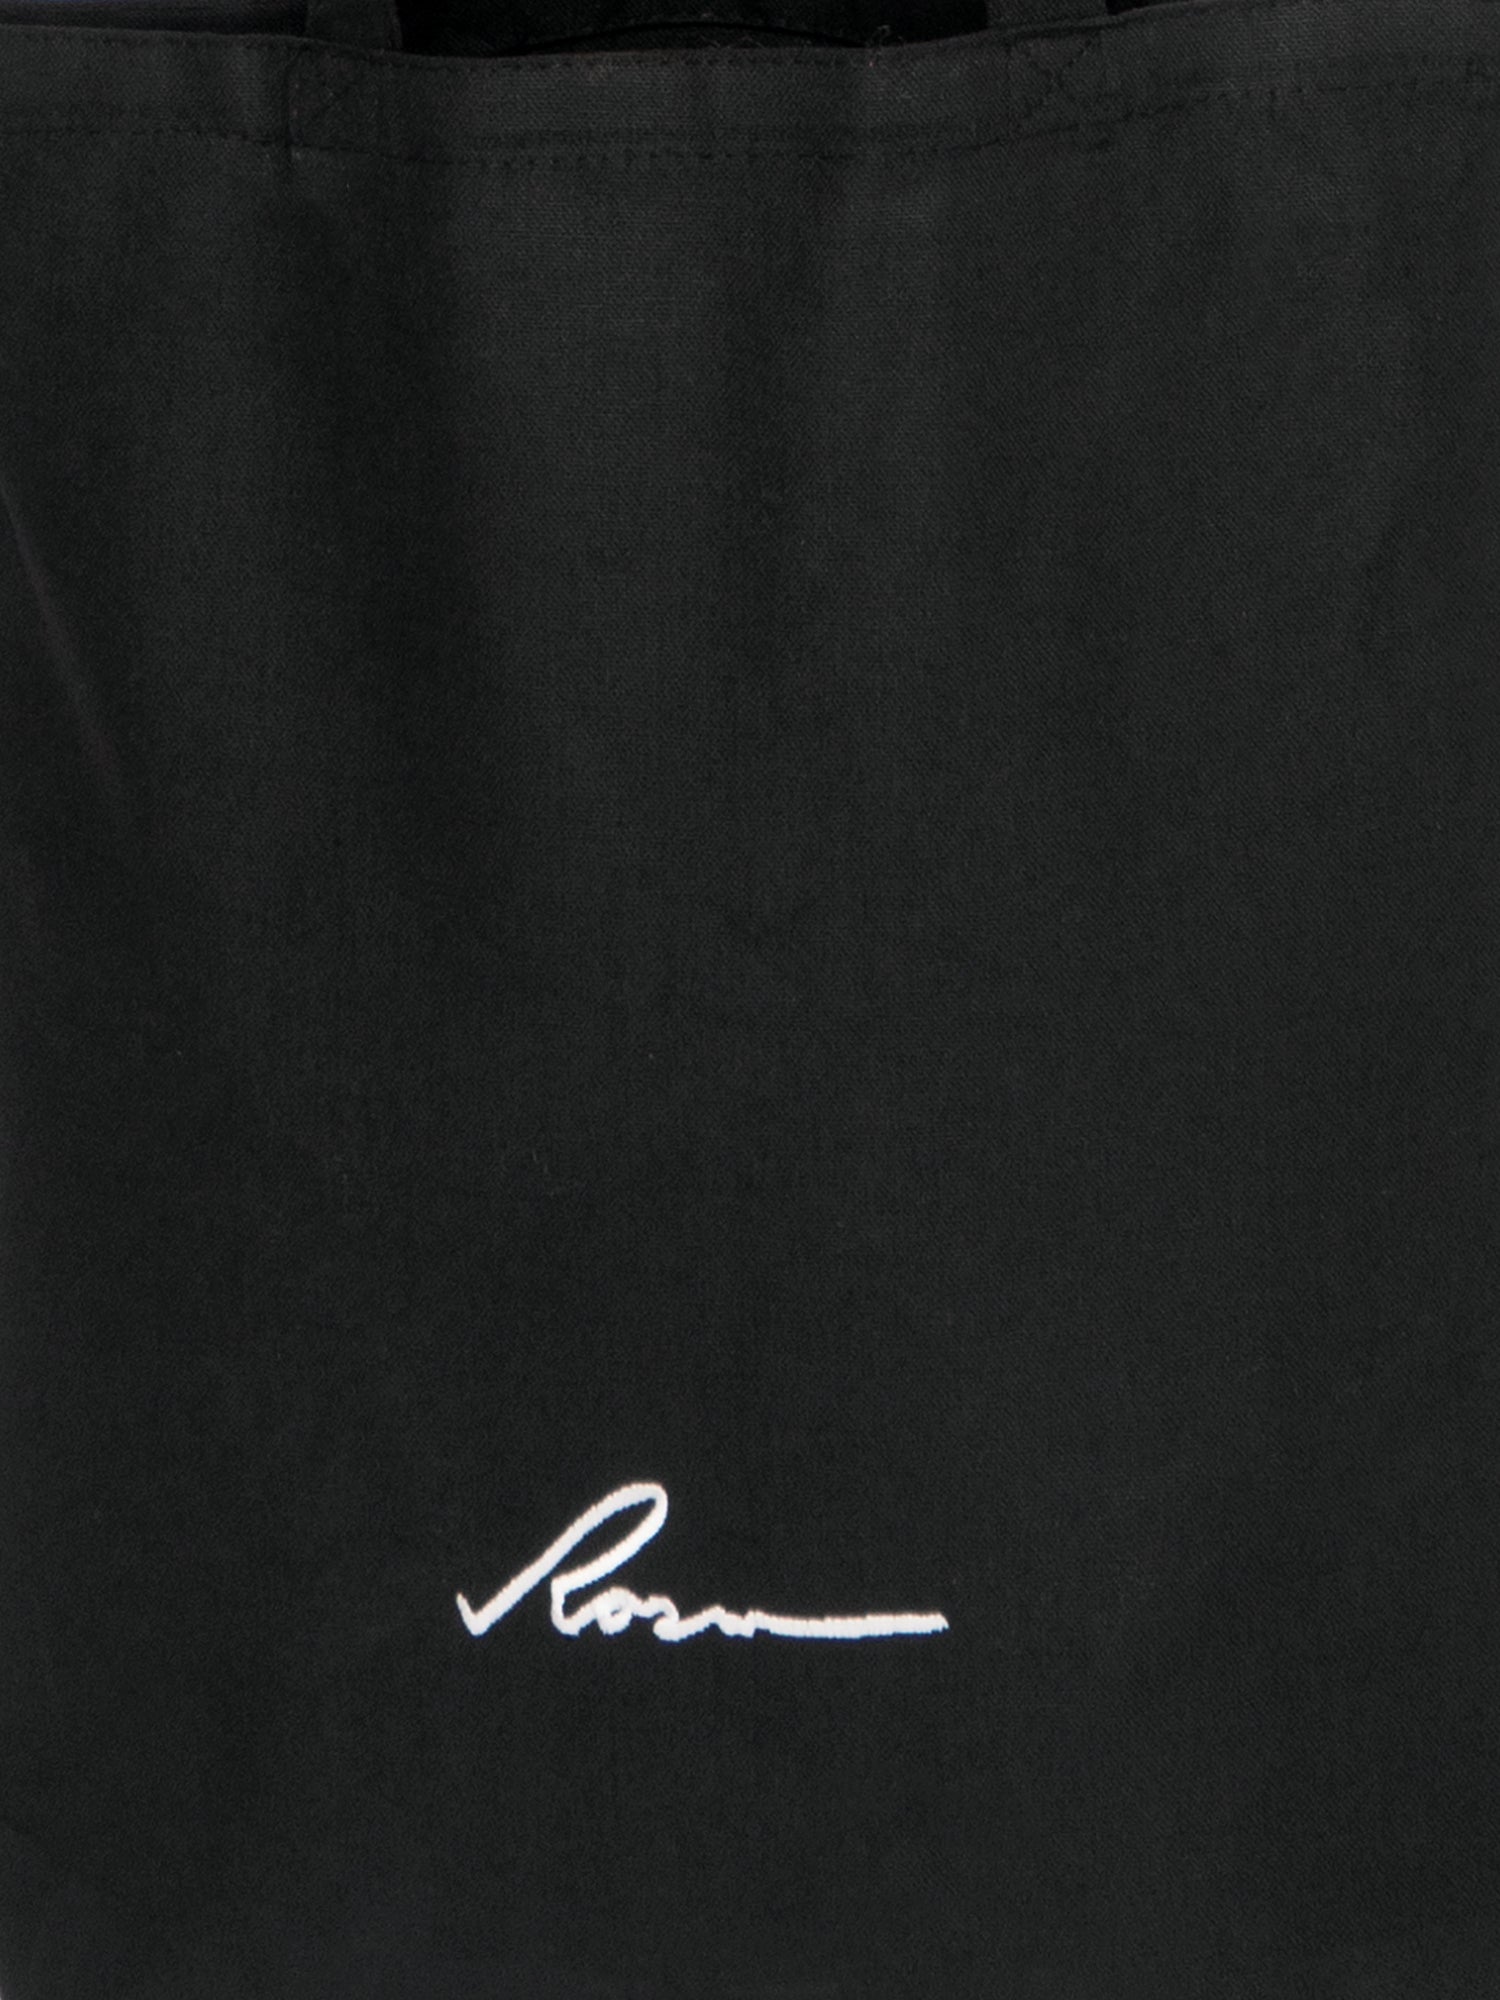 rosin studios black logo embroidered canvas tote bag 